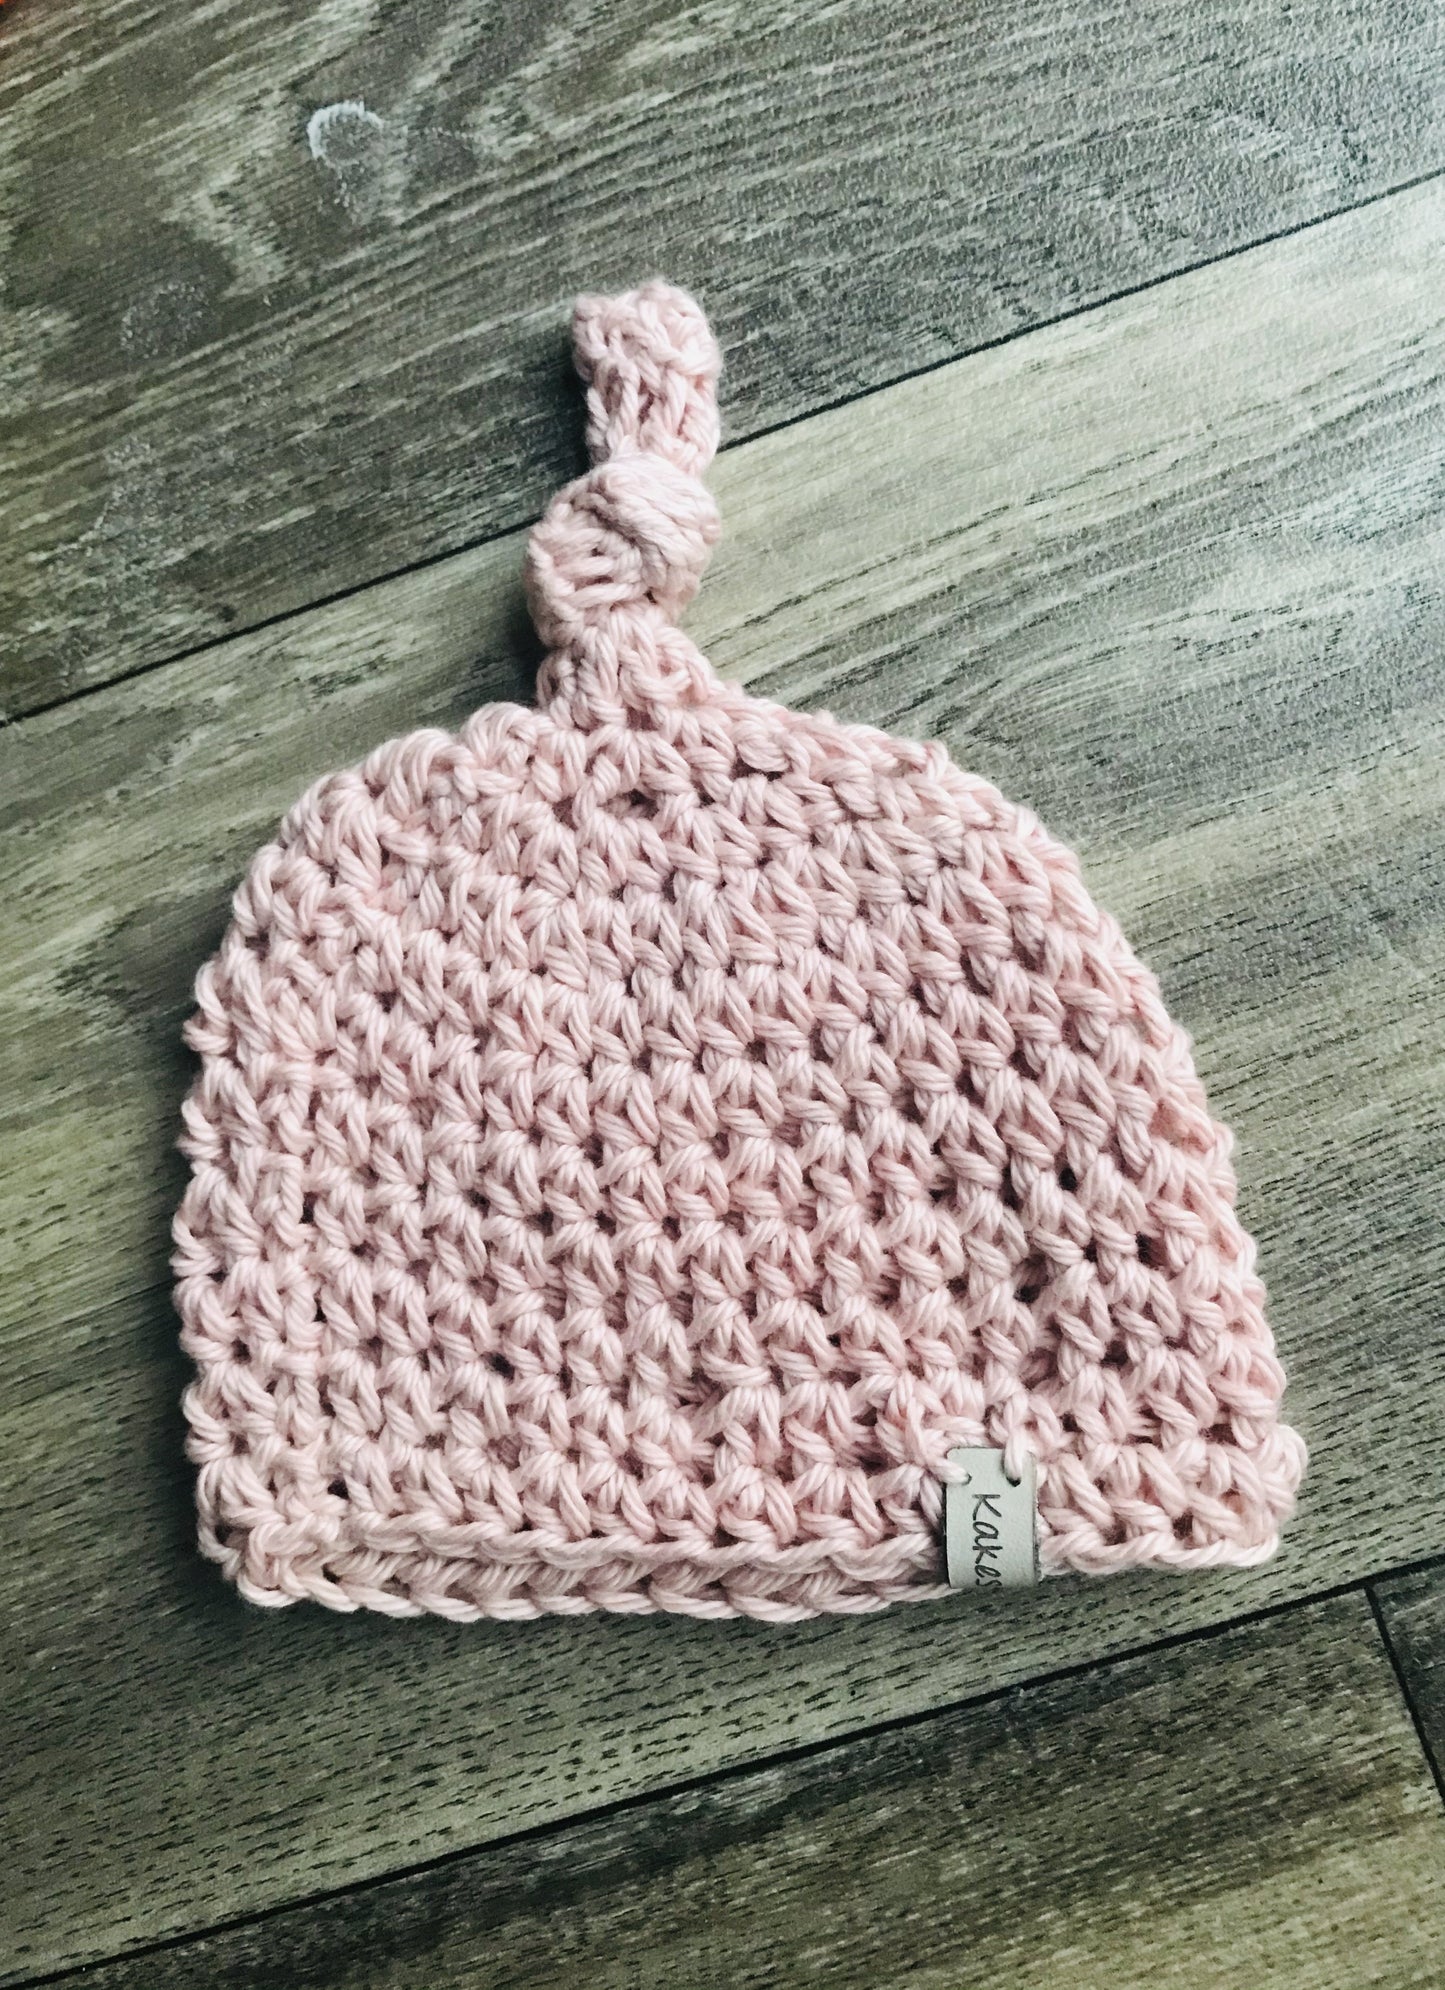 Top knot baby hat,  100% cotton - Neutrals